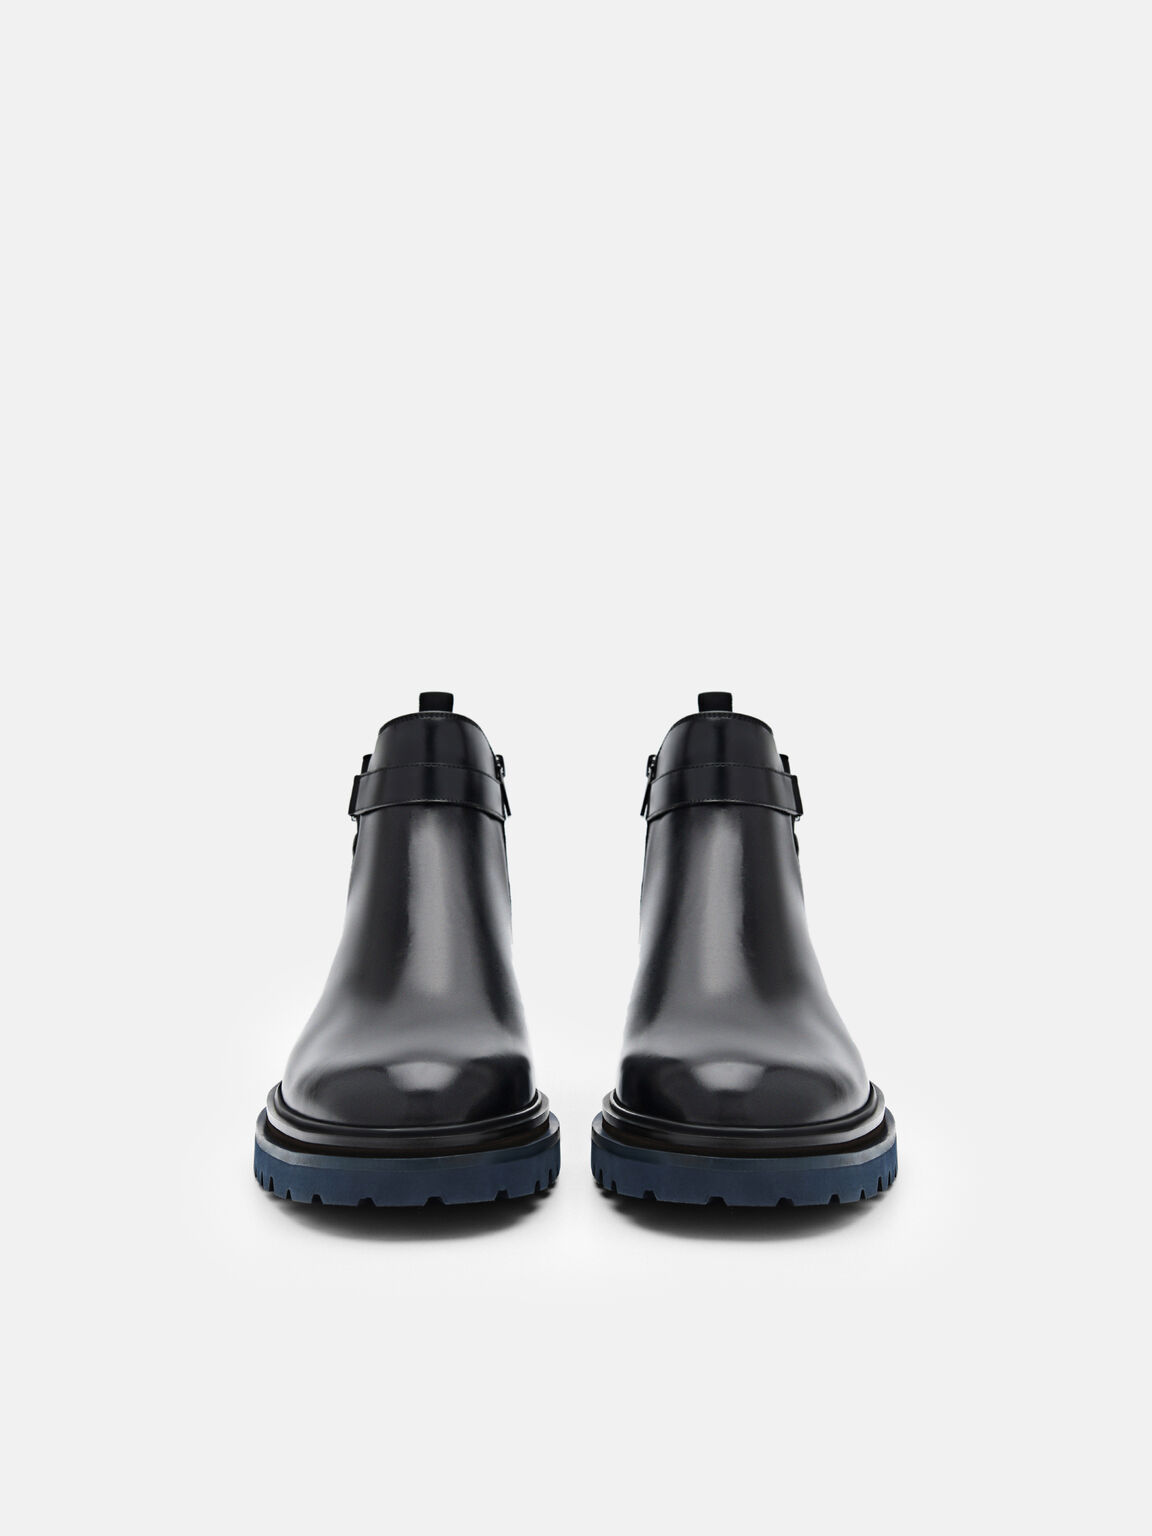 PEDRO Icon Leather Chelsea Boots, Black, hi-res